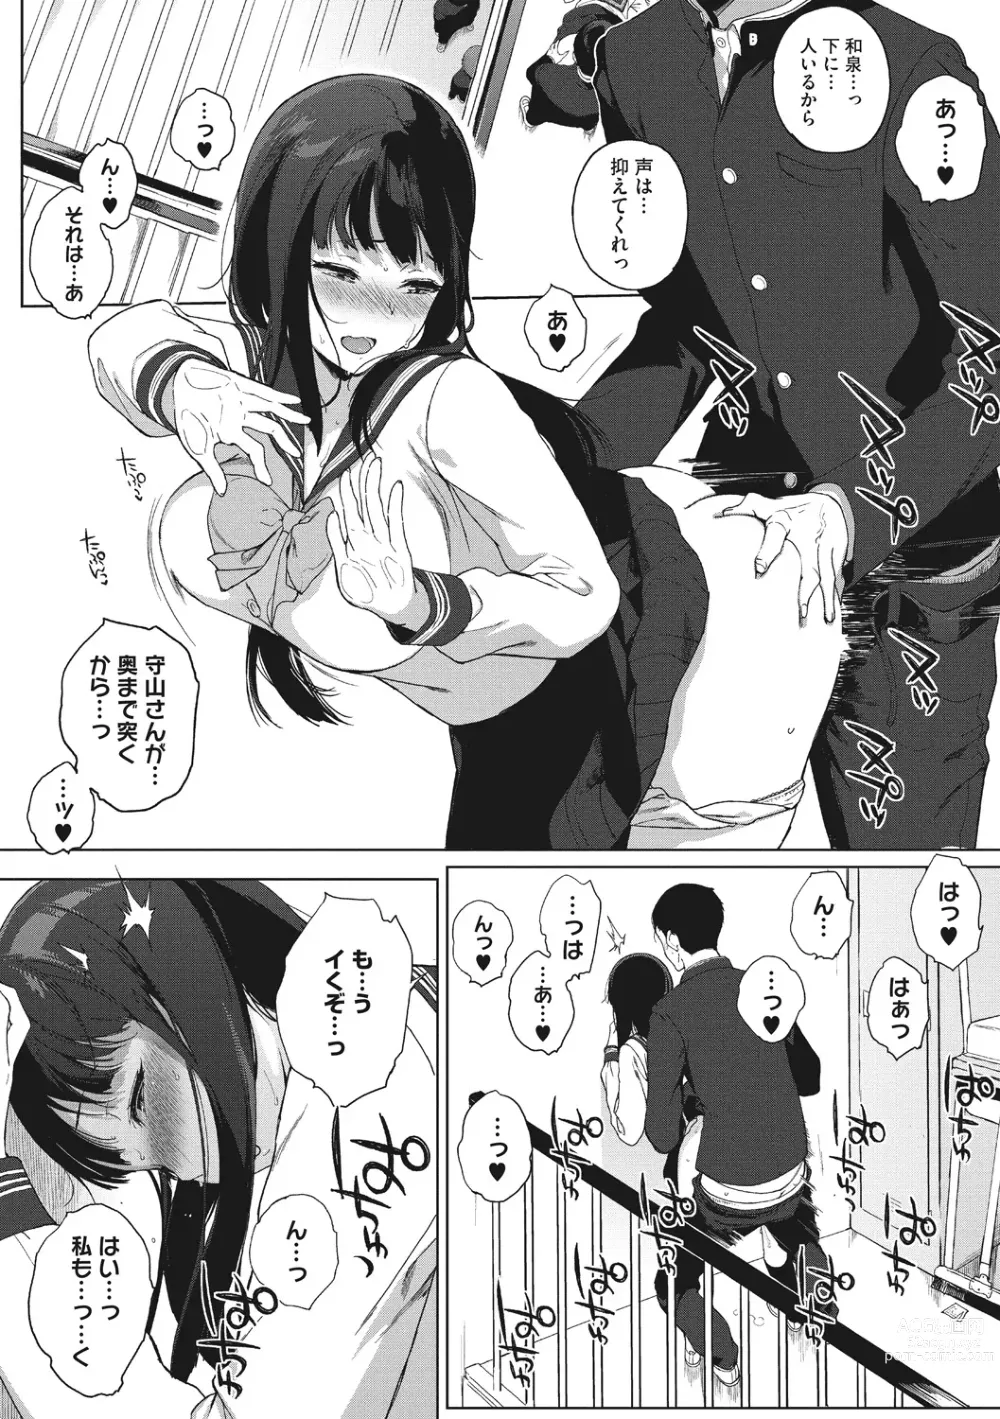 Page 15 of manga Houkago no Yuutousei